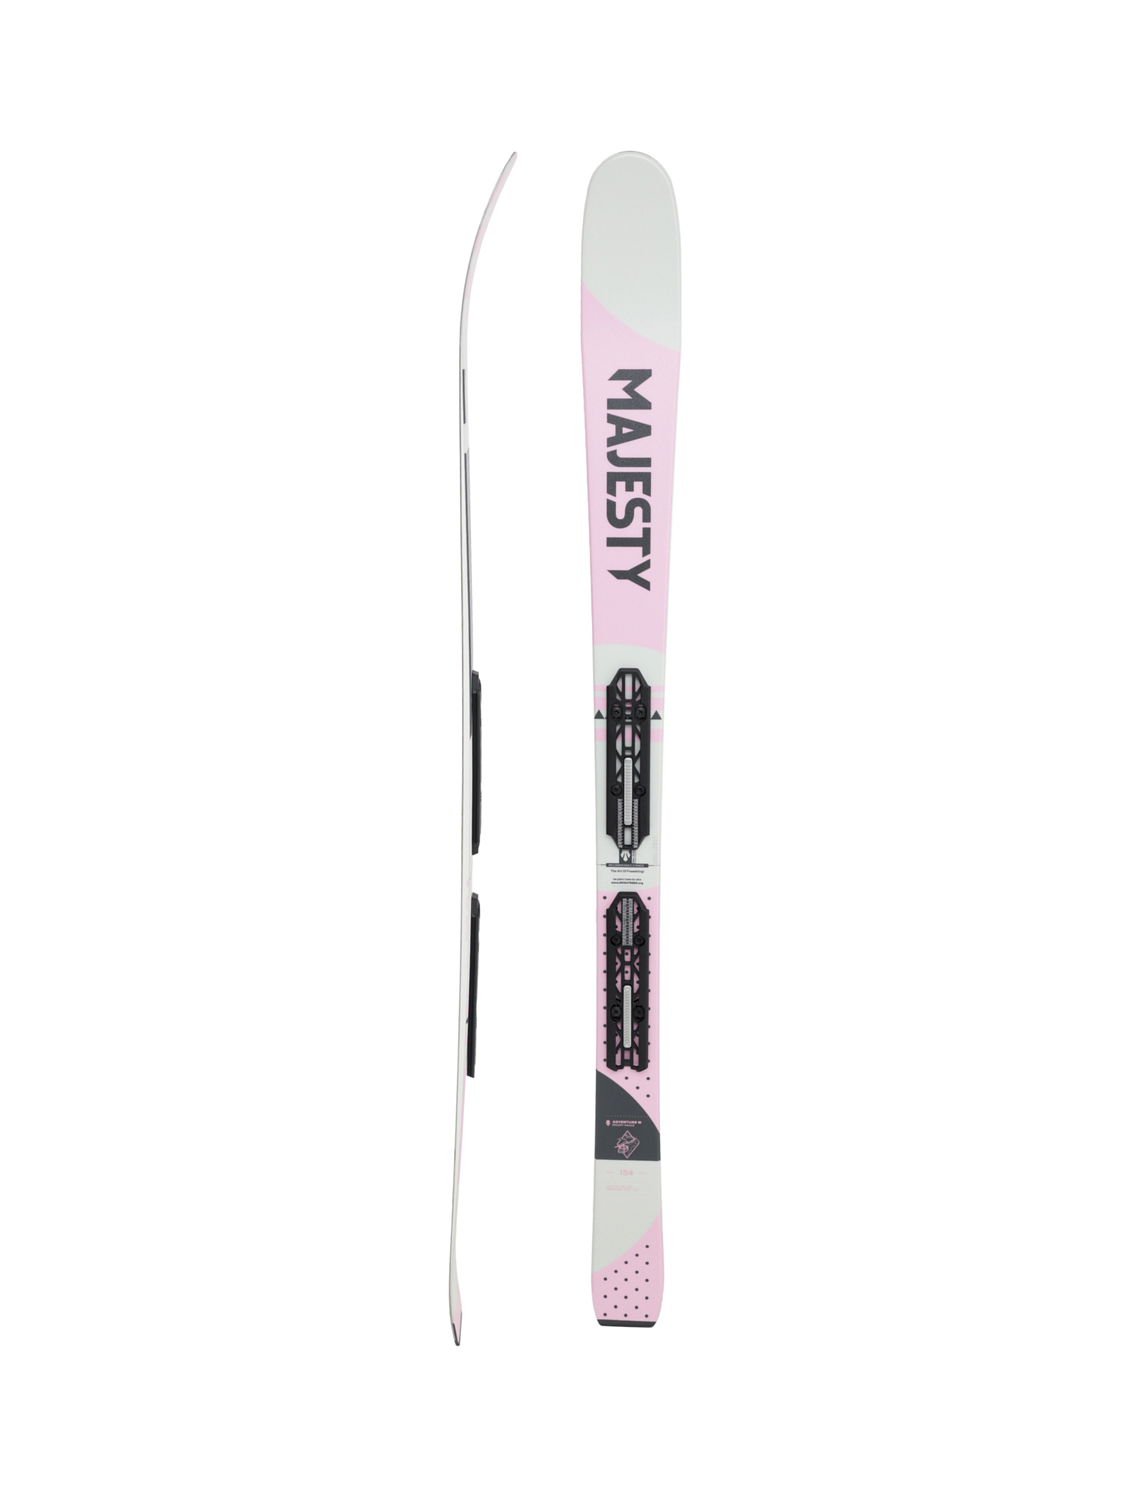 Горные лыжи MAJESTY 2021-22 Adventure W Pink/White